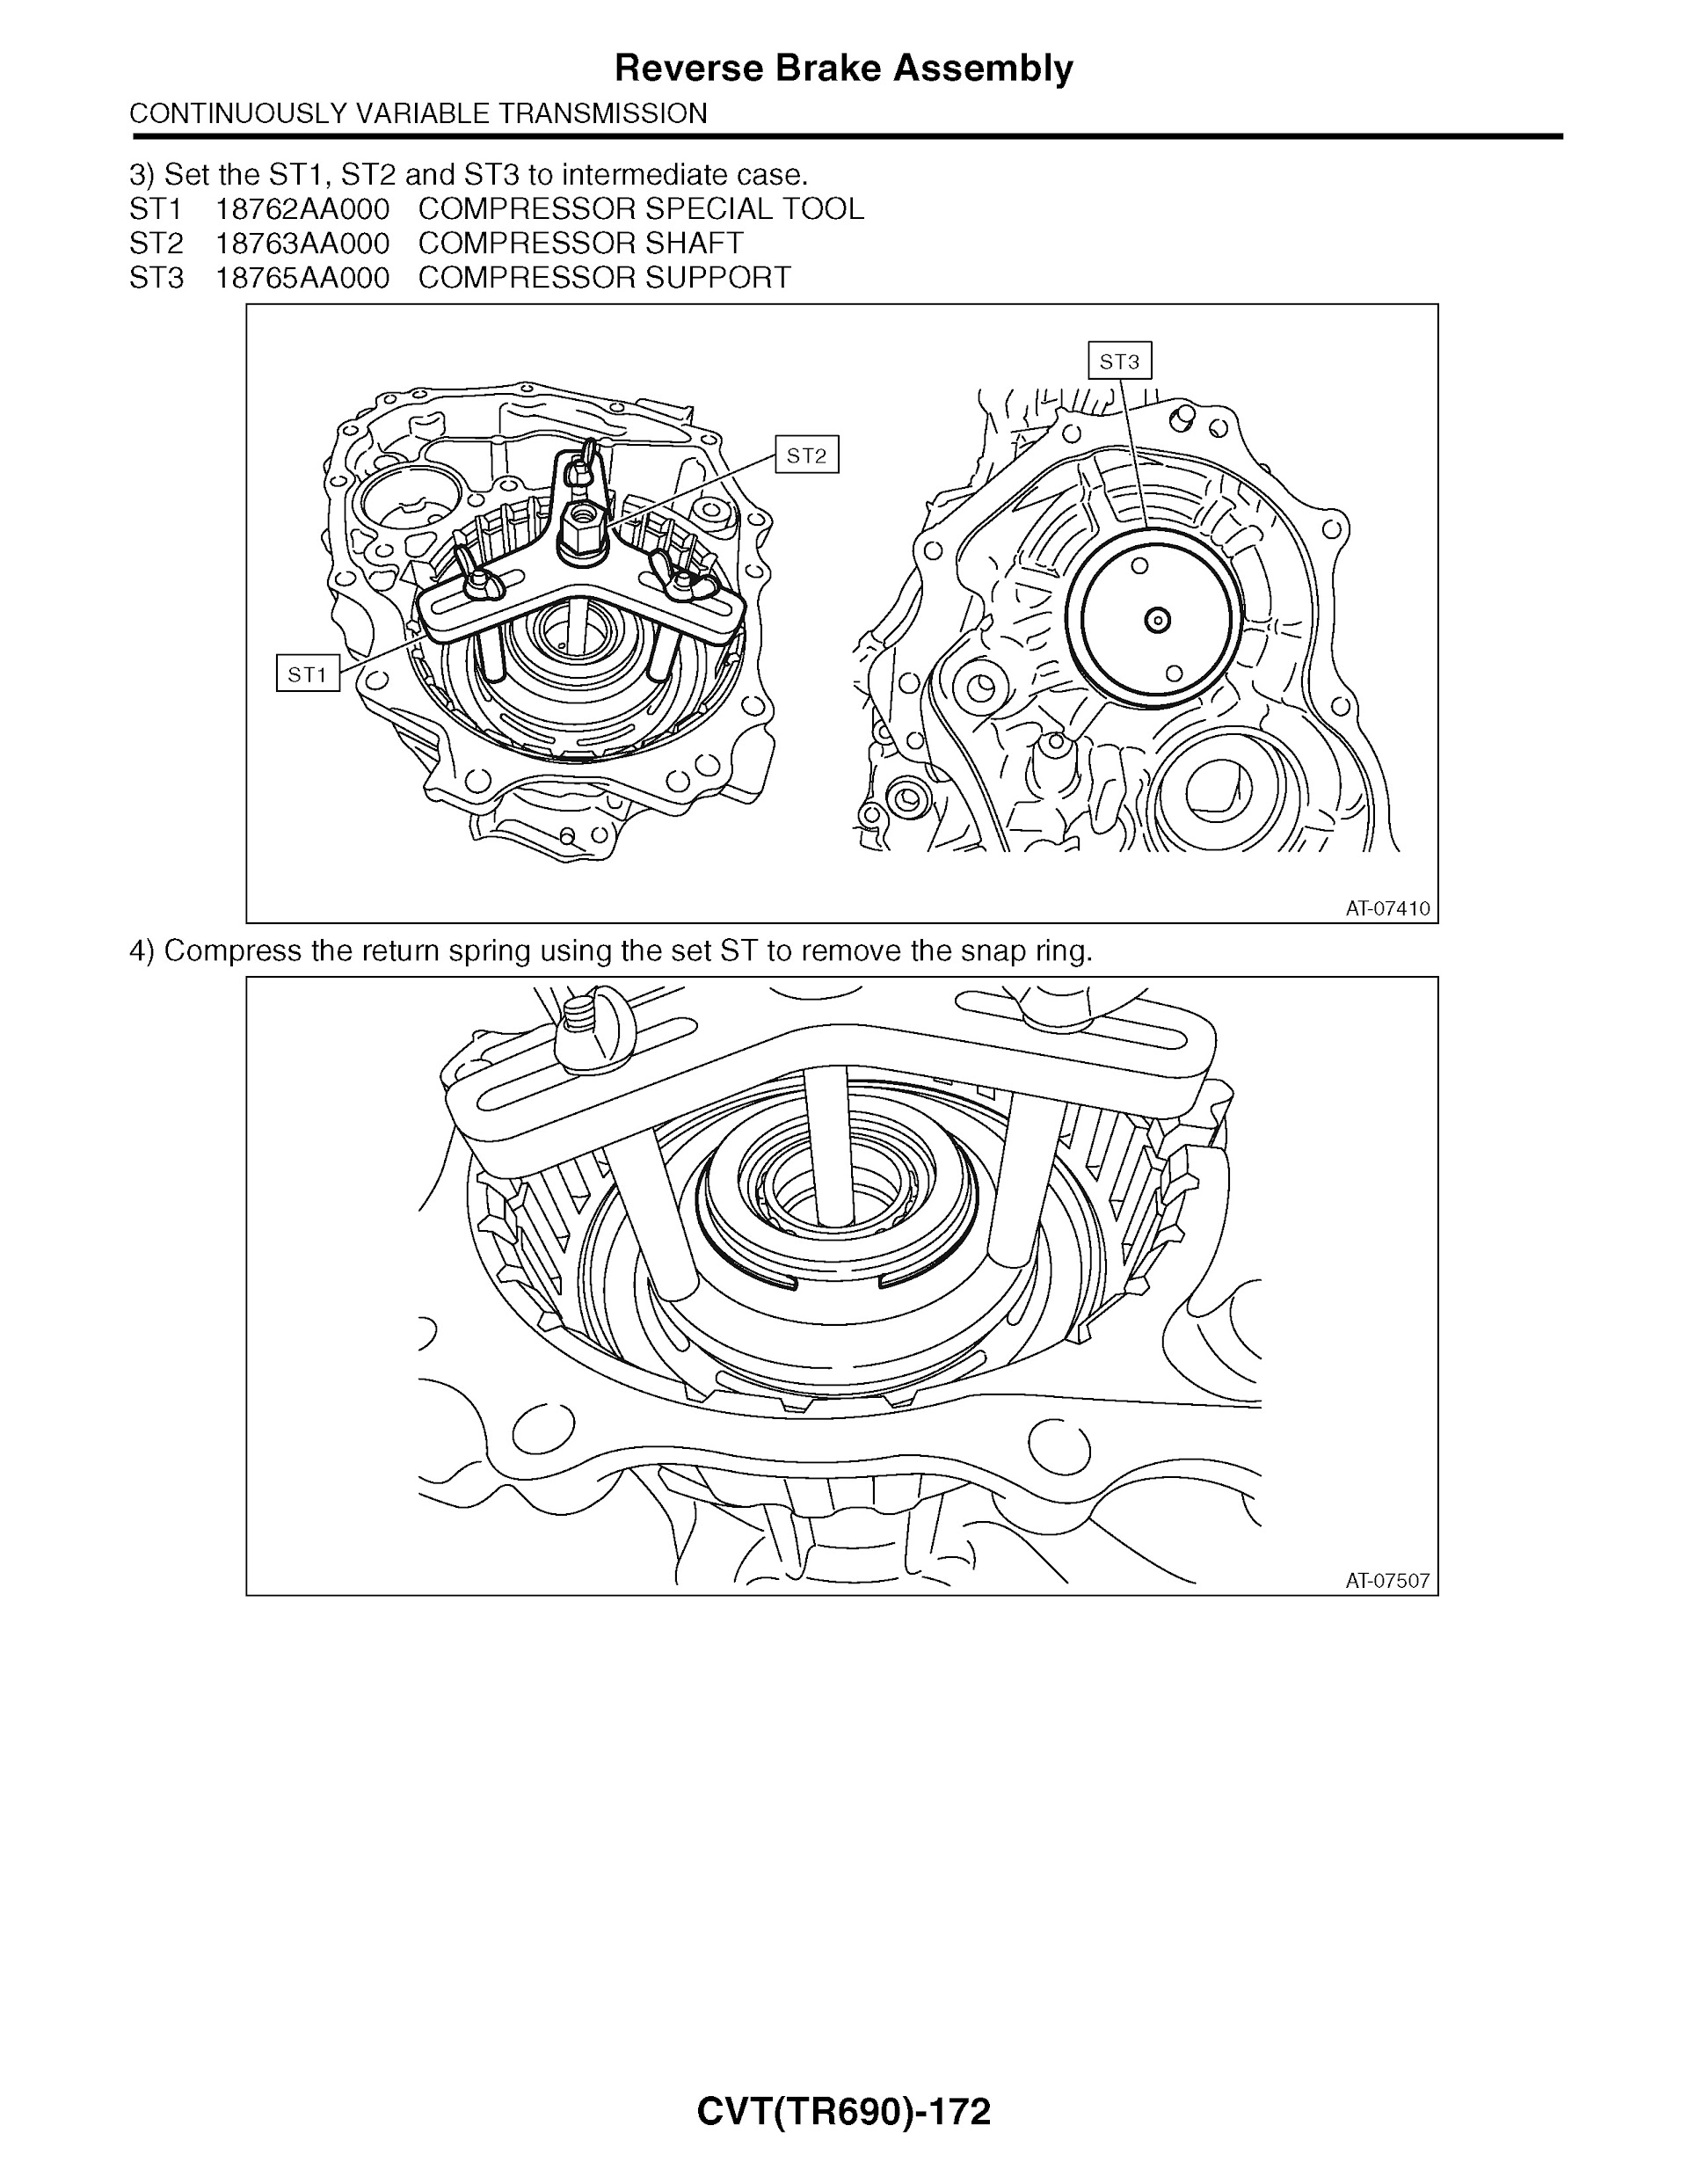 2014 Subaru Forester Repair Manual Reverse Brake Assembly